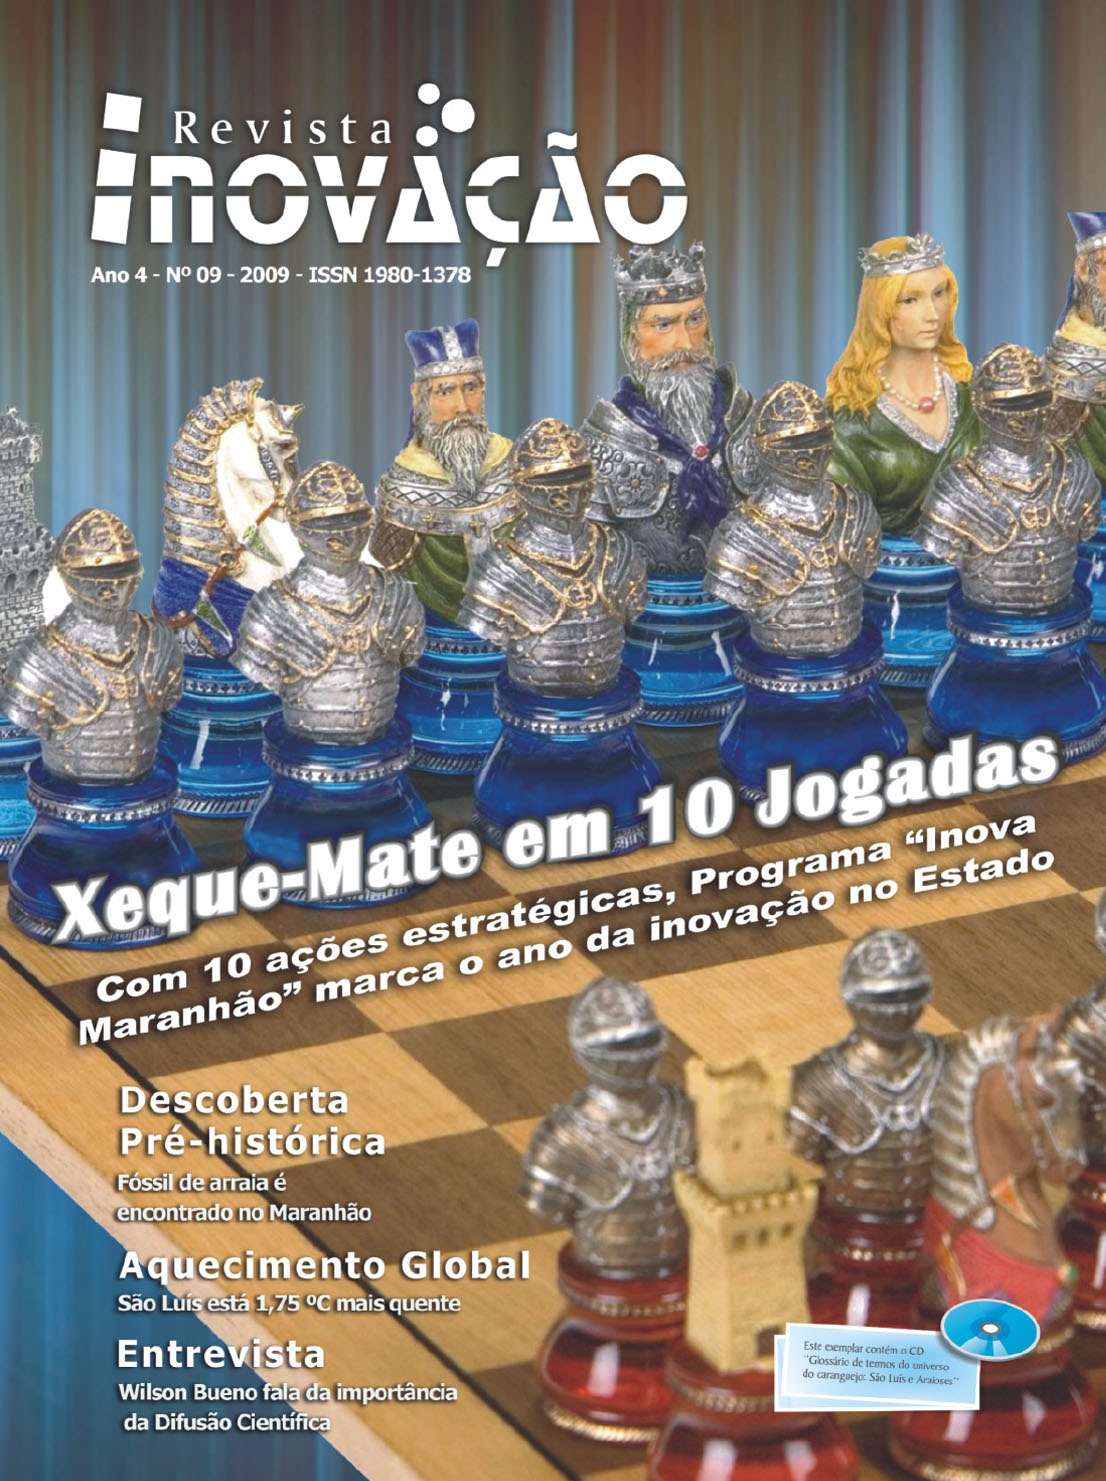 CAPAS revista Inovacao 01 - 26_0008_Camada 14